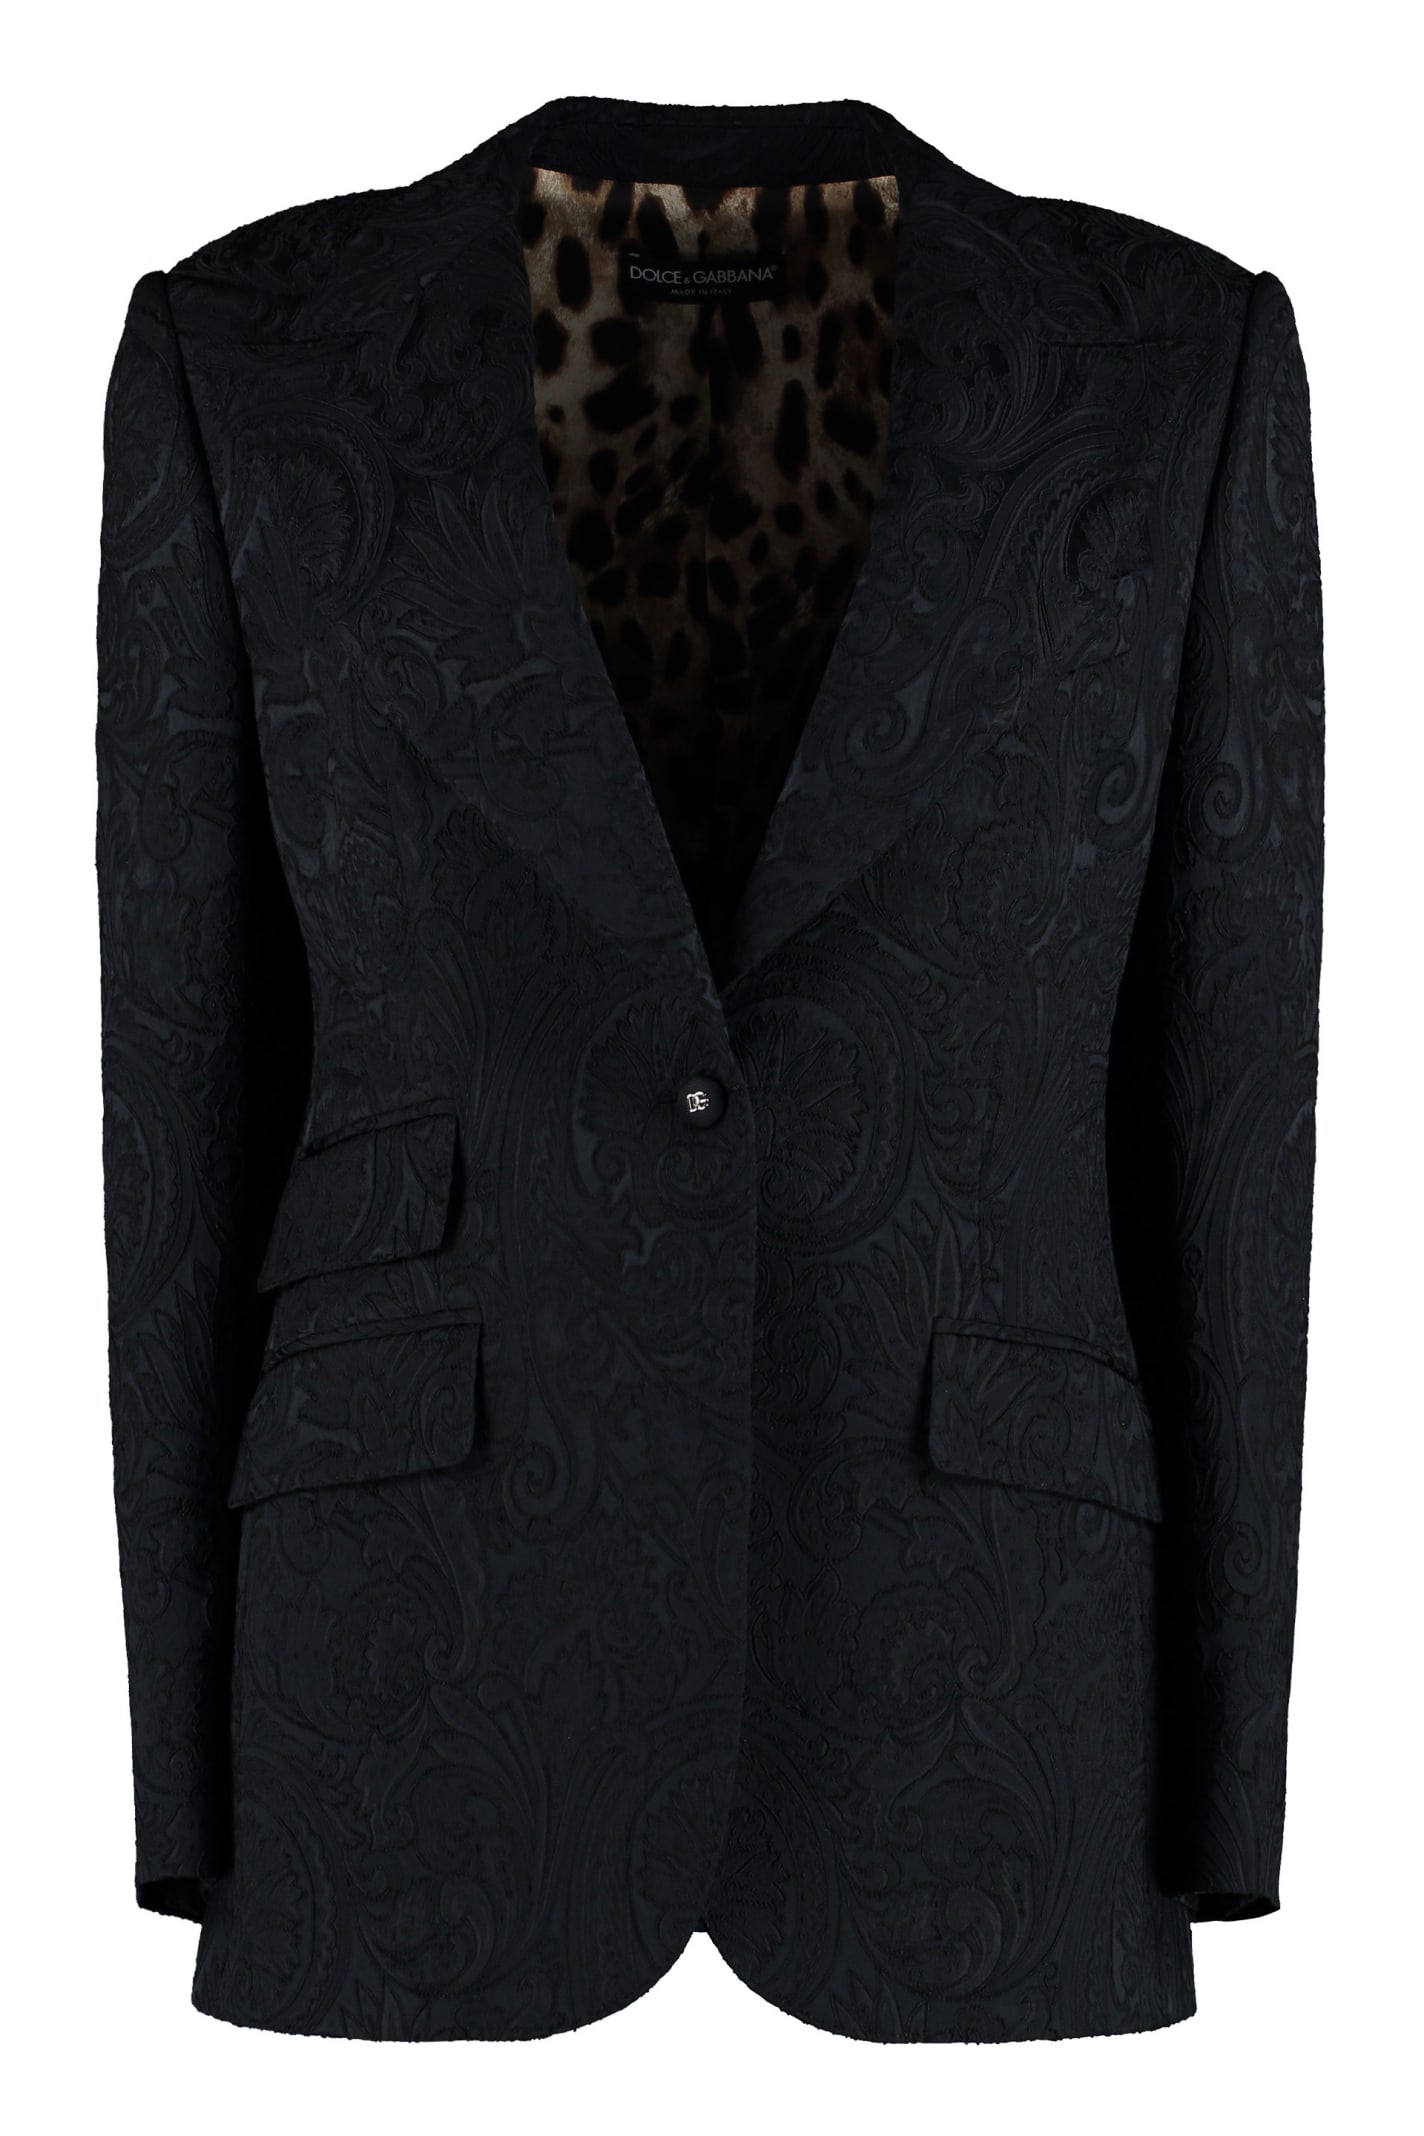 Dolce & Gabbana Brocade Sigle-breasted Blazer In Black | ModeSens